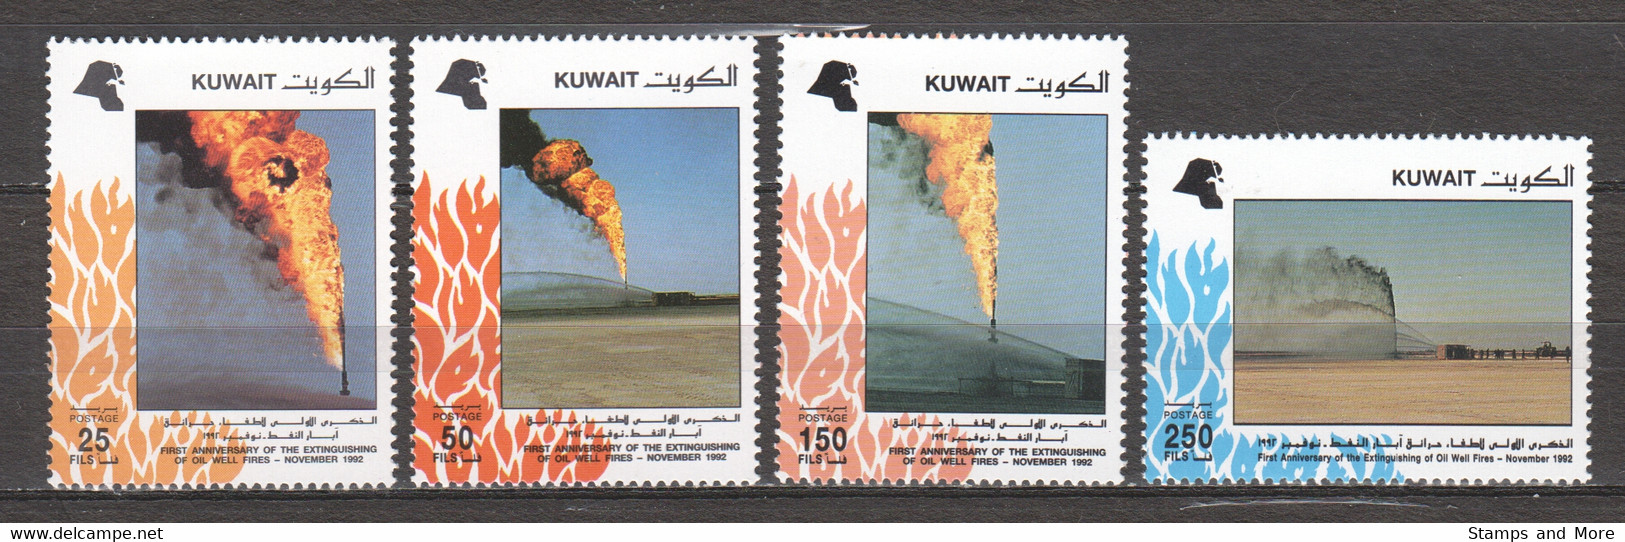 Kuwait 1992 Mi 1333-1336 MNH - OIL WELL FIRES - Kuwait